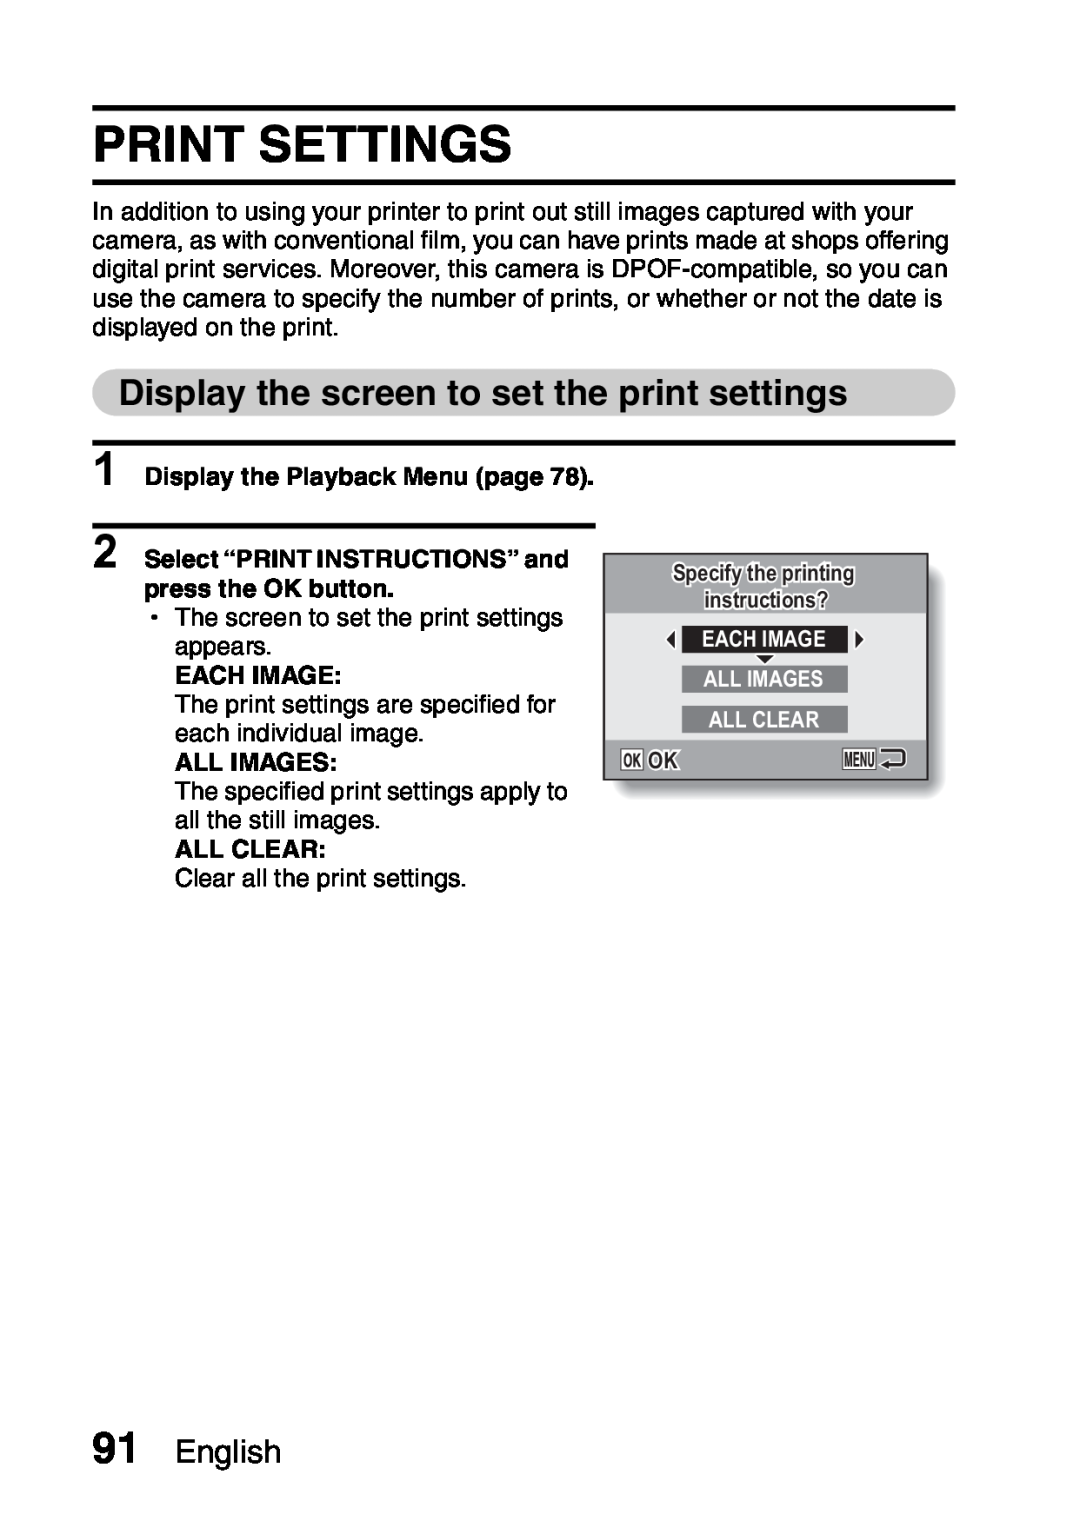 Samsung R50 Print Settings, Display the screen to set the print settings, English, Display the Playback Menu page 